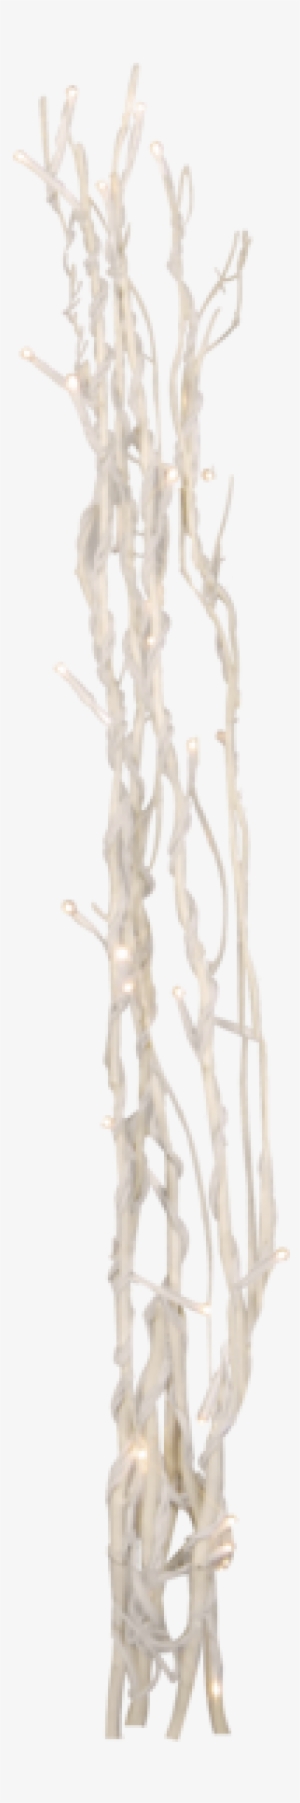 Decorative Twig Willow - Hierochloe